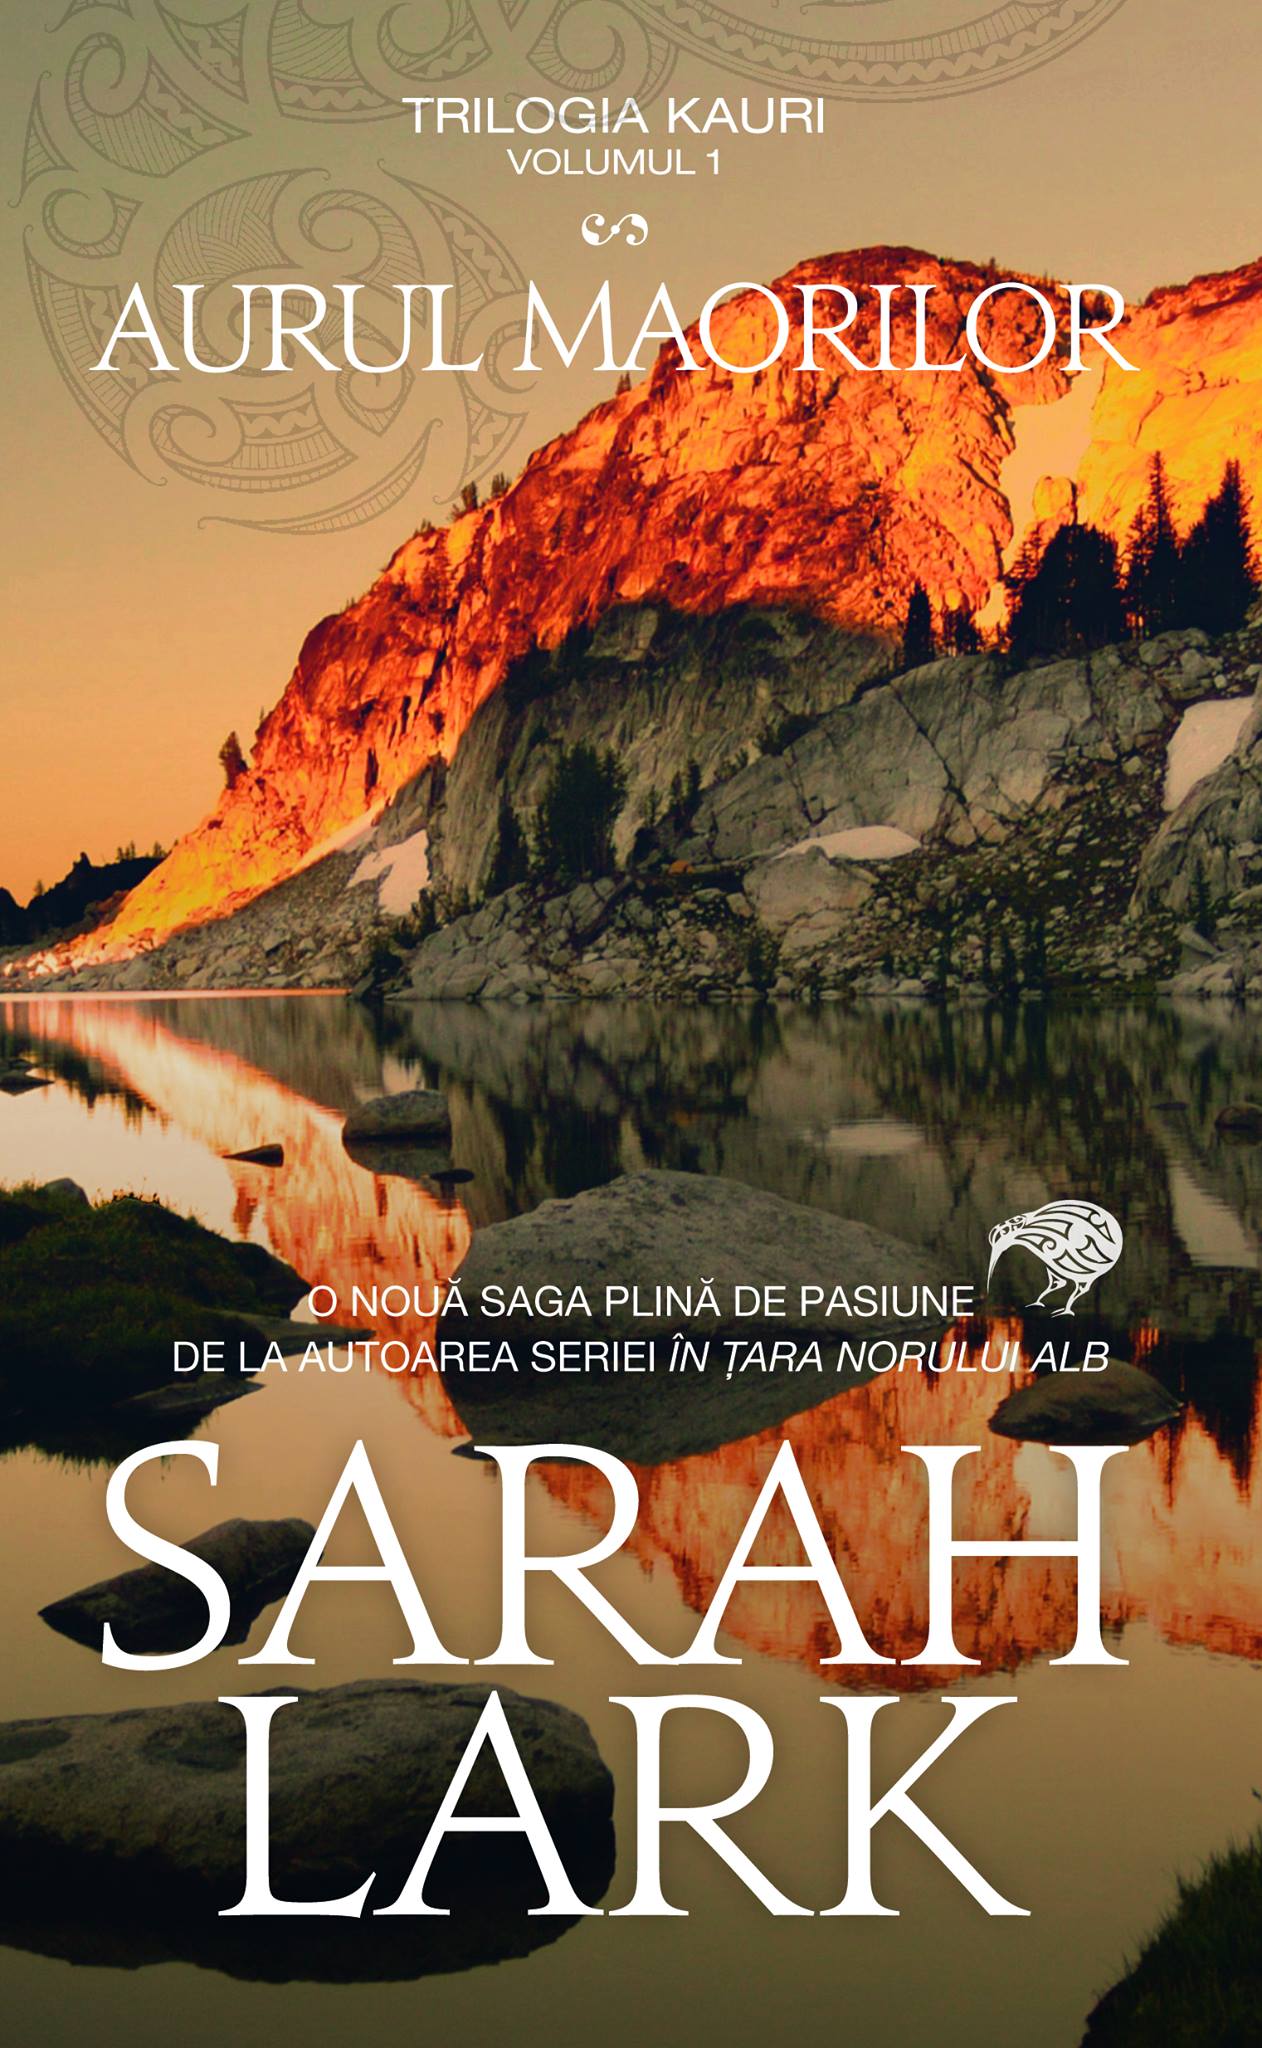 Aurul Maorilor de Sarah Lark - recenzie